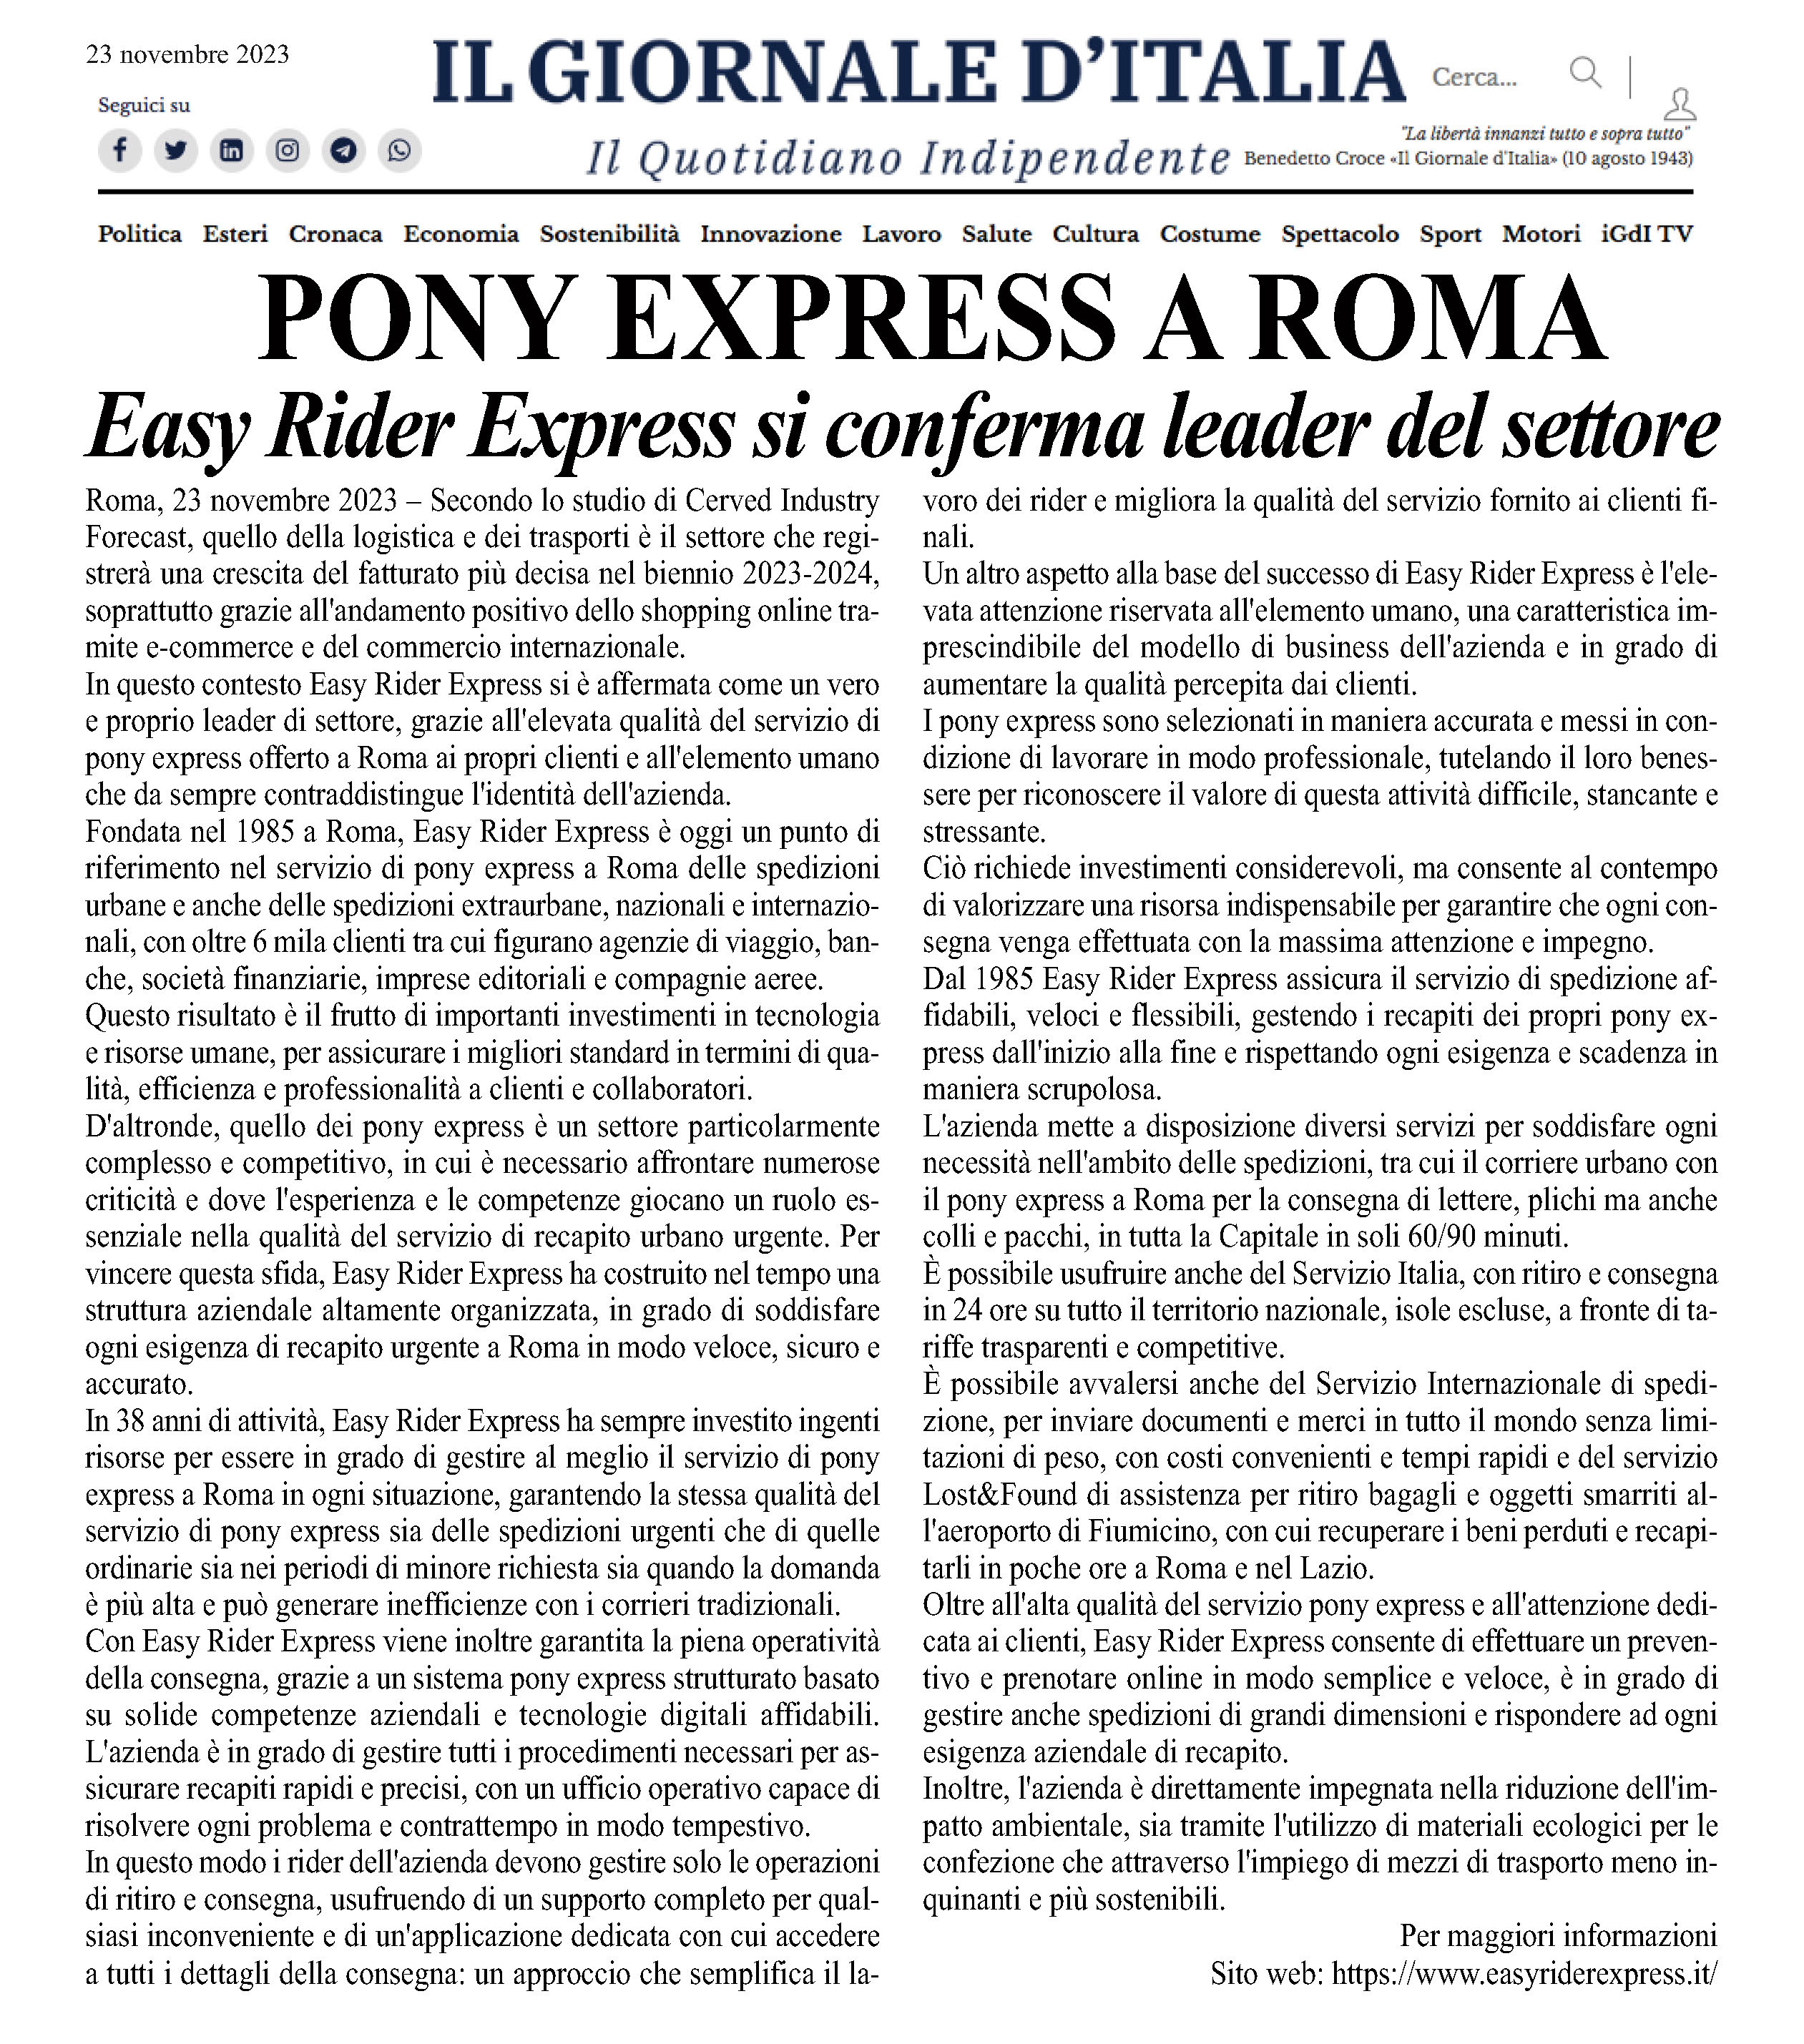 Pony express a Roma: Easy Rider Express si conferma leader del settore